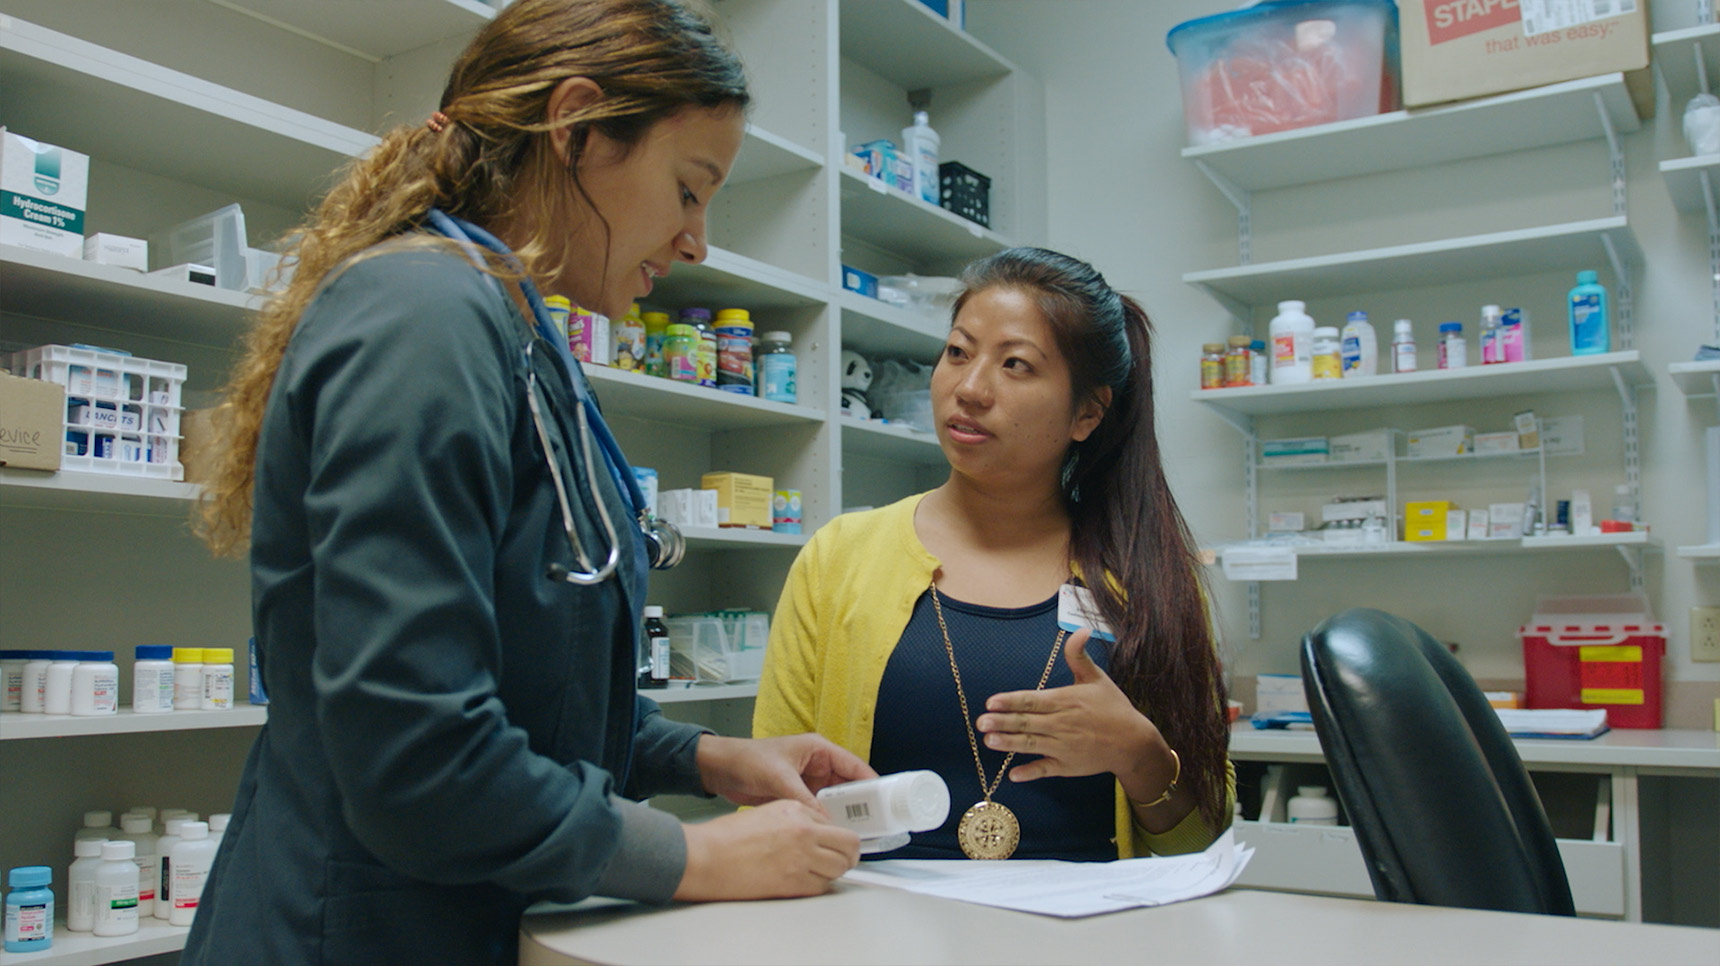 siloam community health worker talks with pharmacist